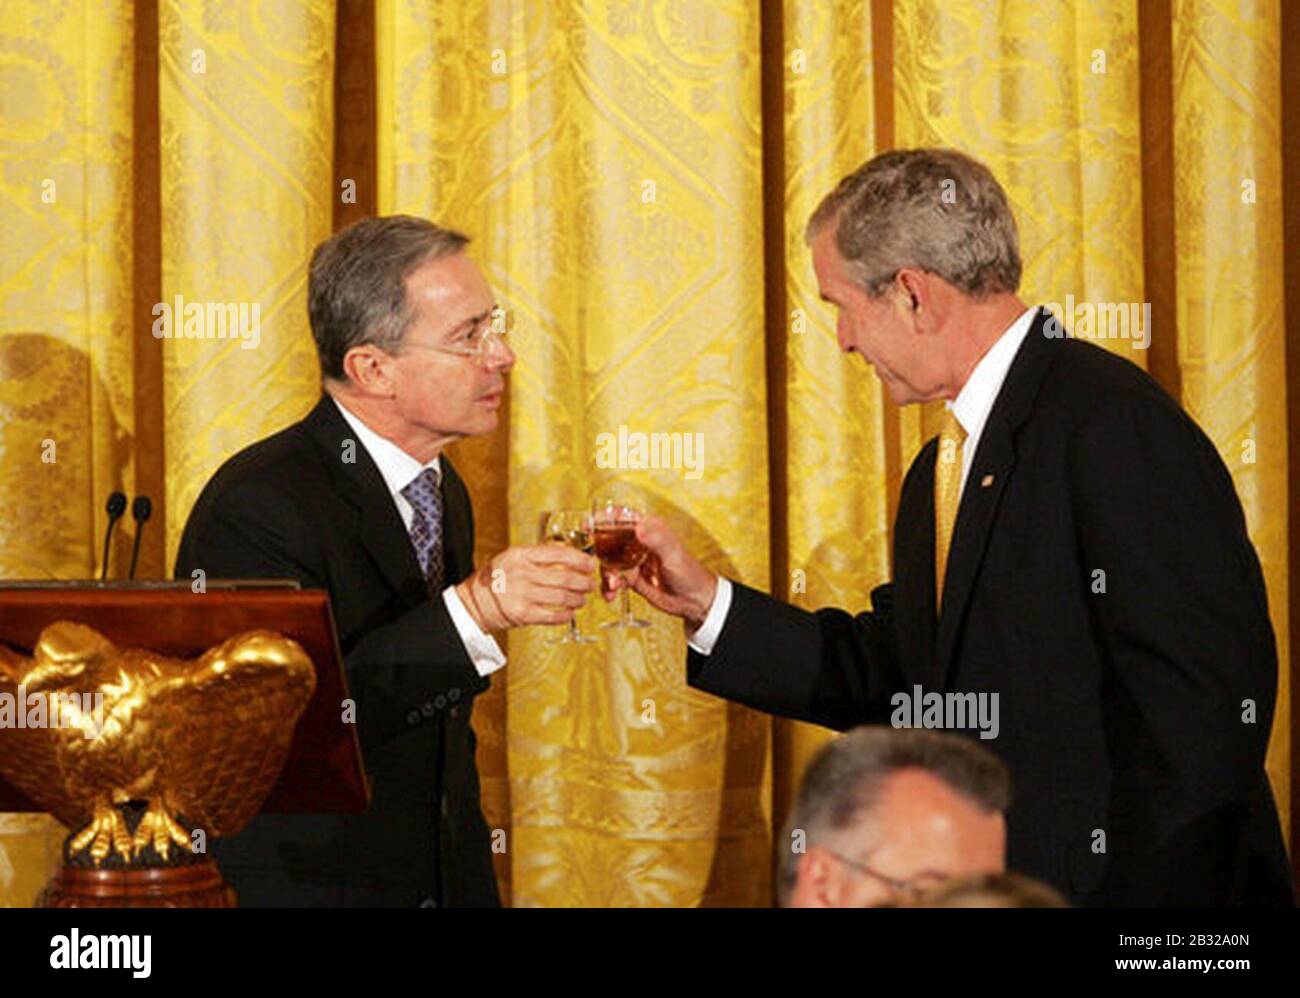 George Bush toast with Alvaro Uribe Velez. Stock Photo